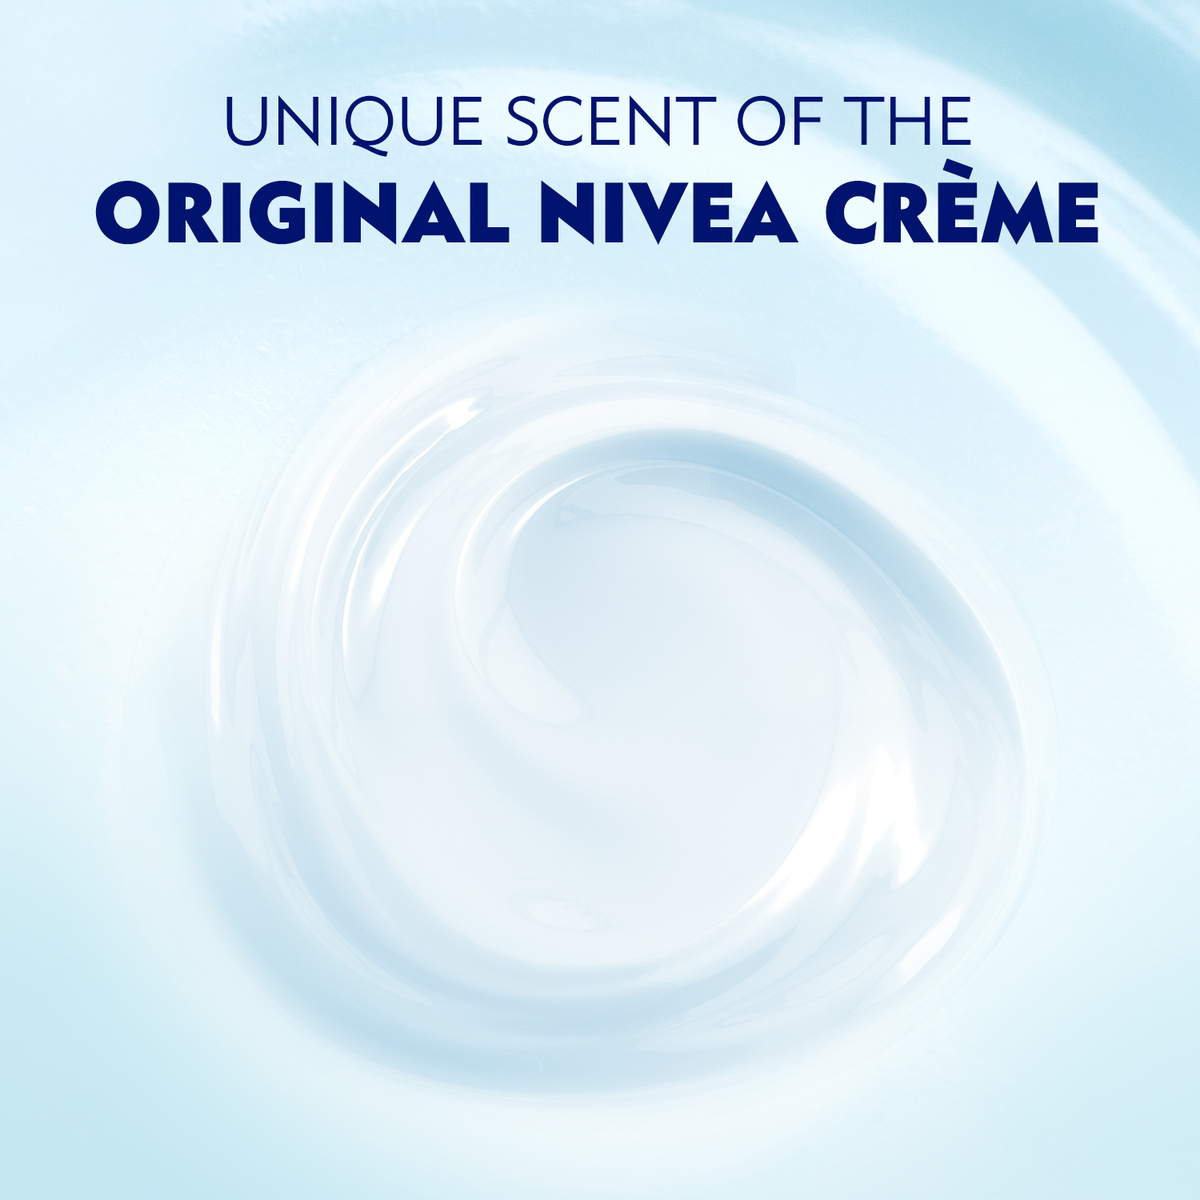 Nivea Creme Liquid Hand Wash Original 250ml